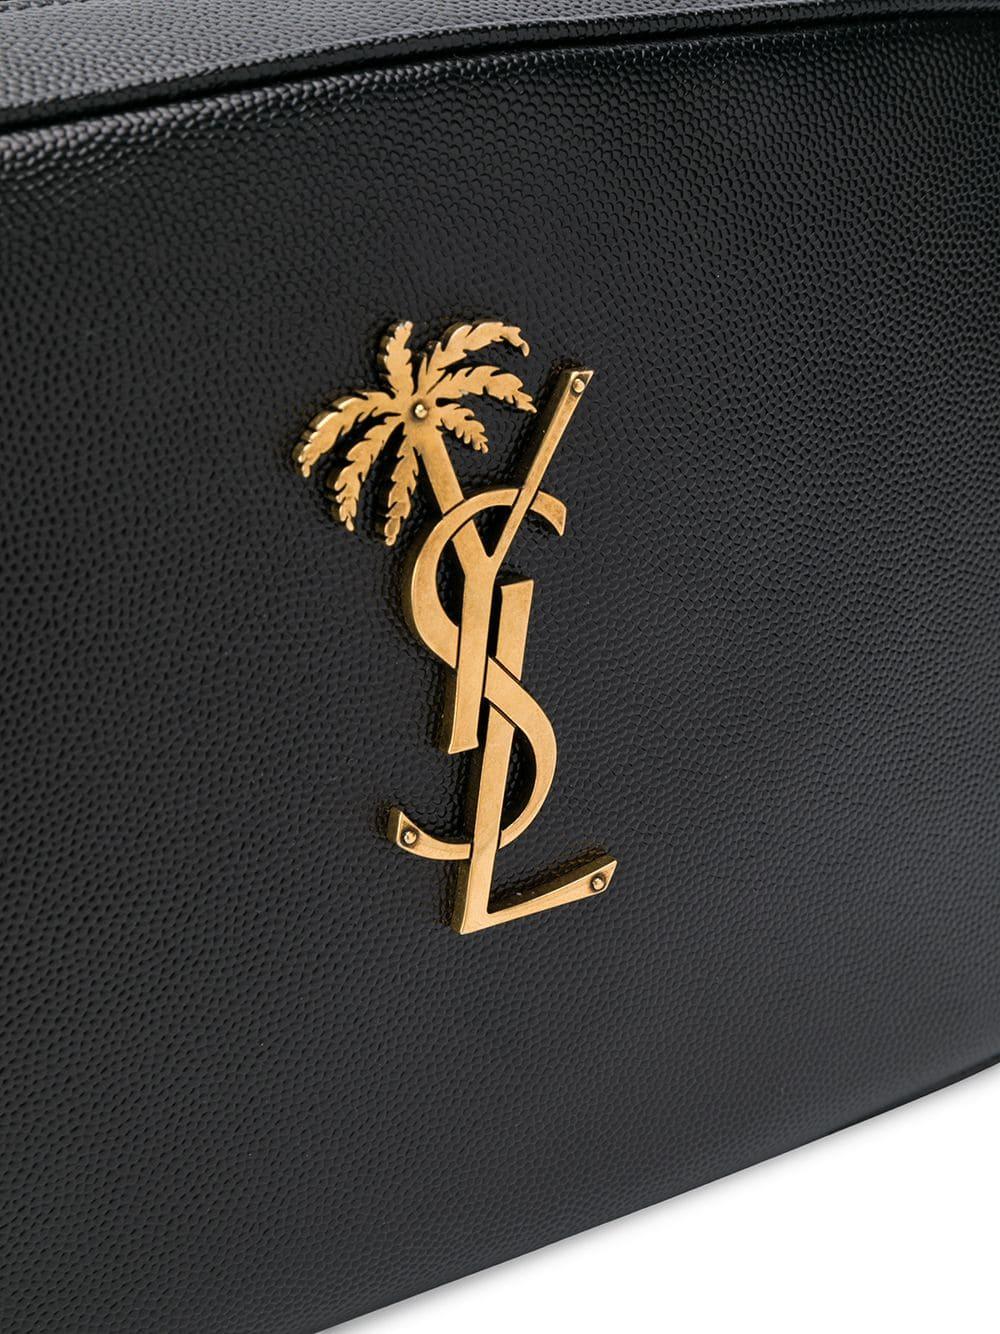 Saint Laurent Palm Tree Logo Bag in Black